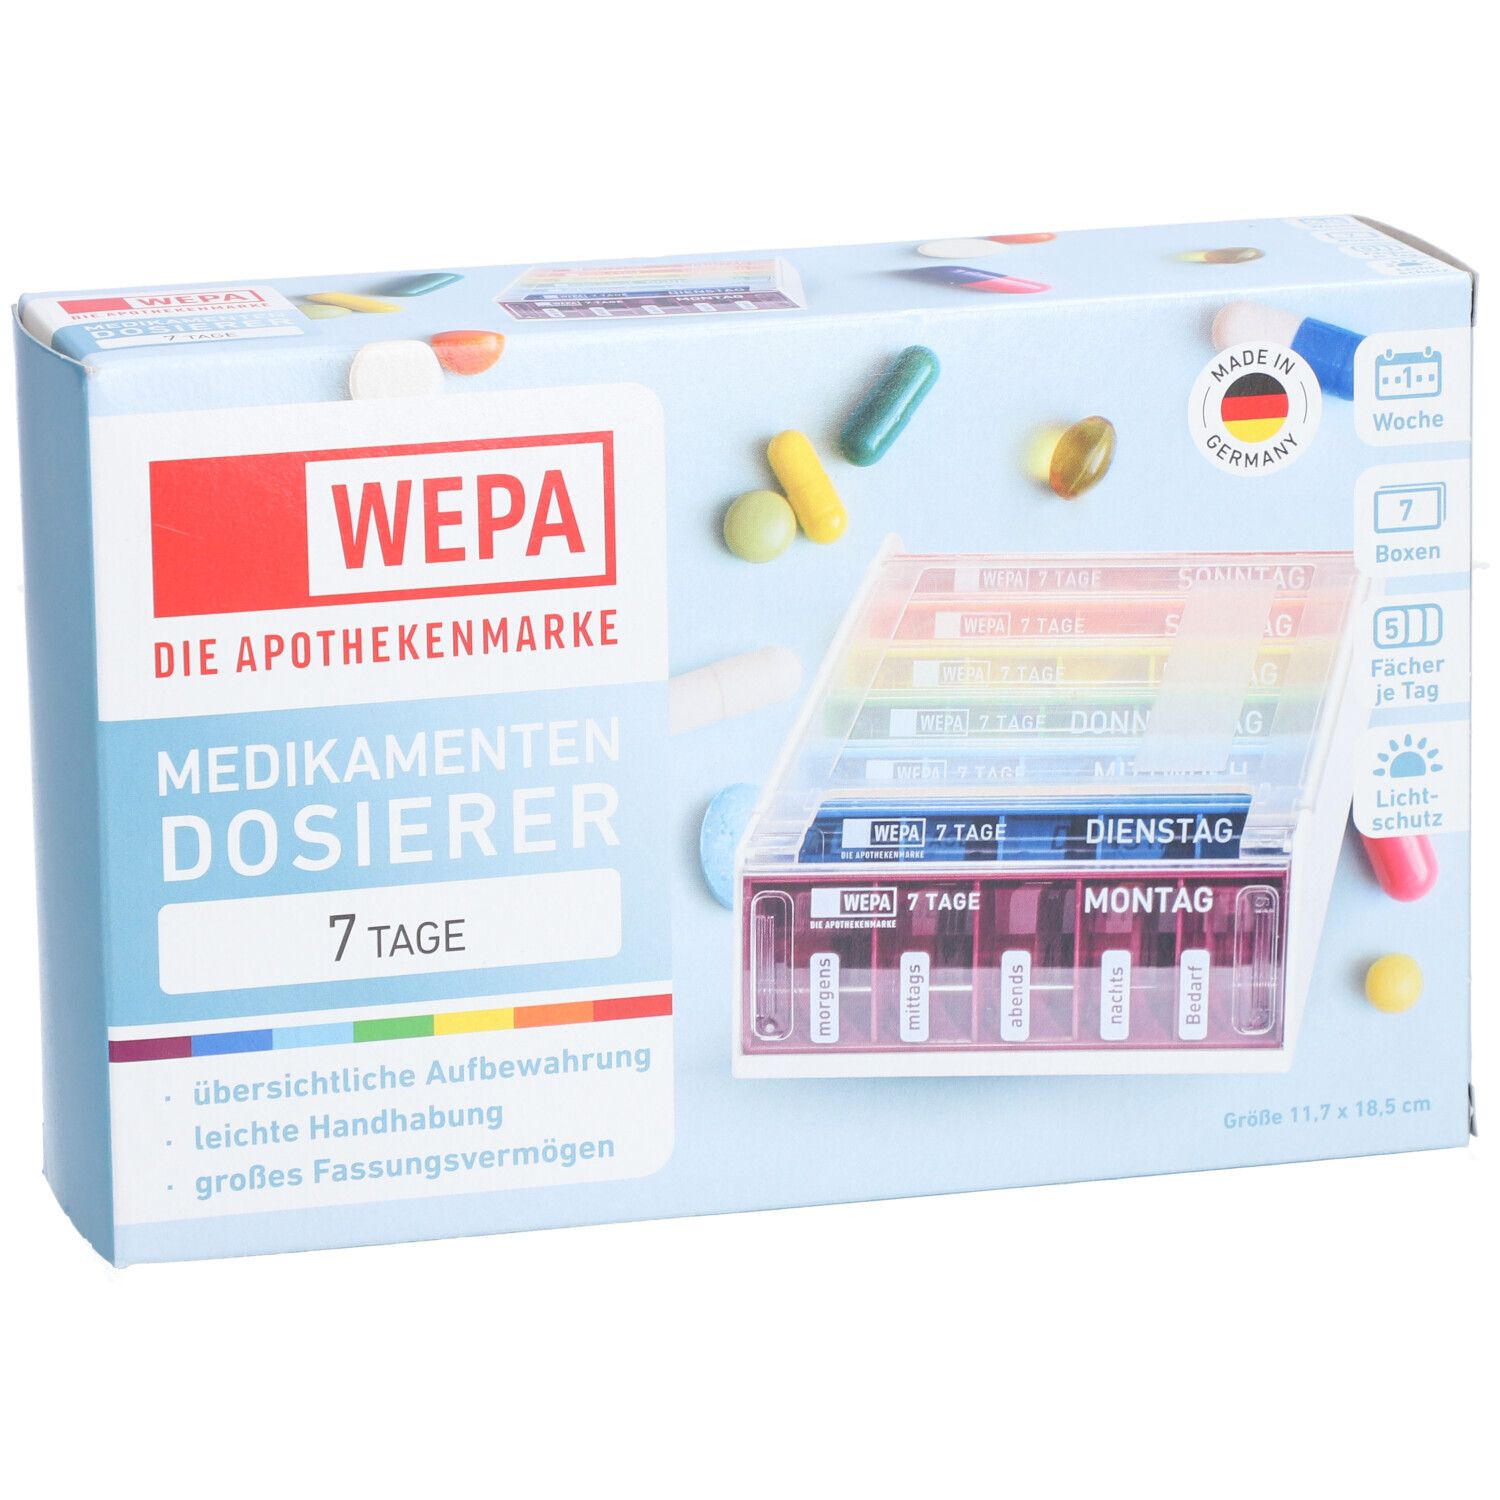 WEPA Medikamentendosierer 7 Tage Wochenmagazin Regenbogen/UV-Schutz+